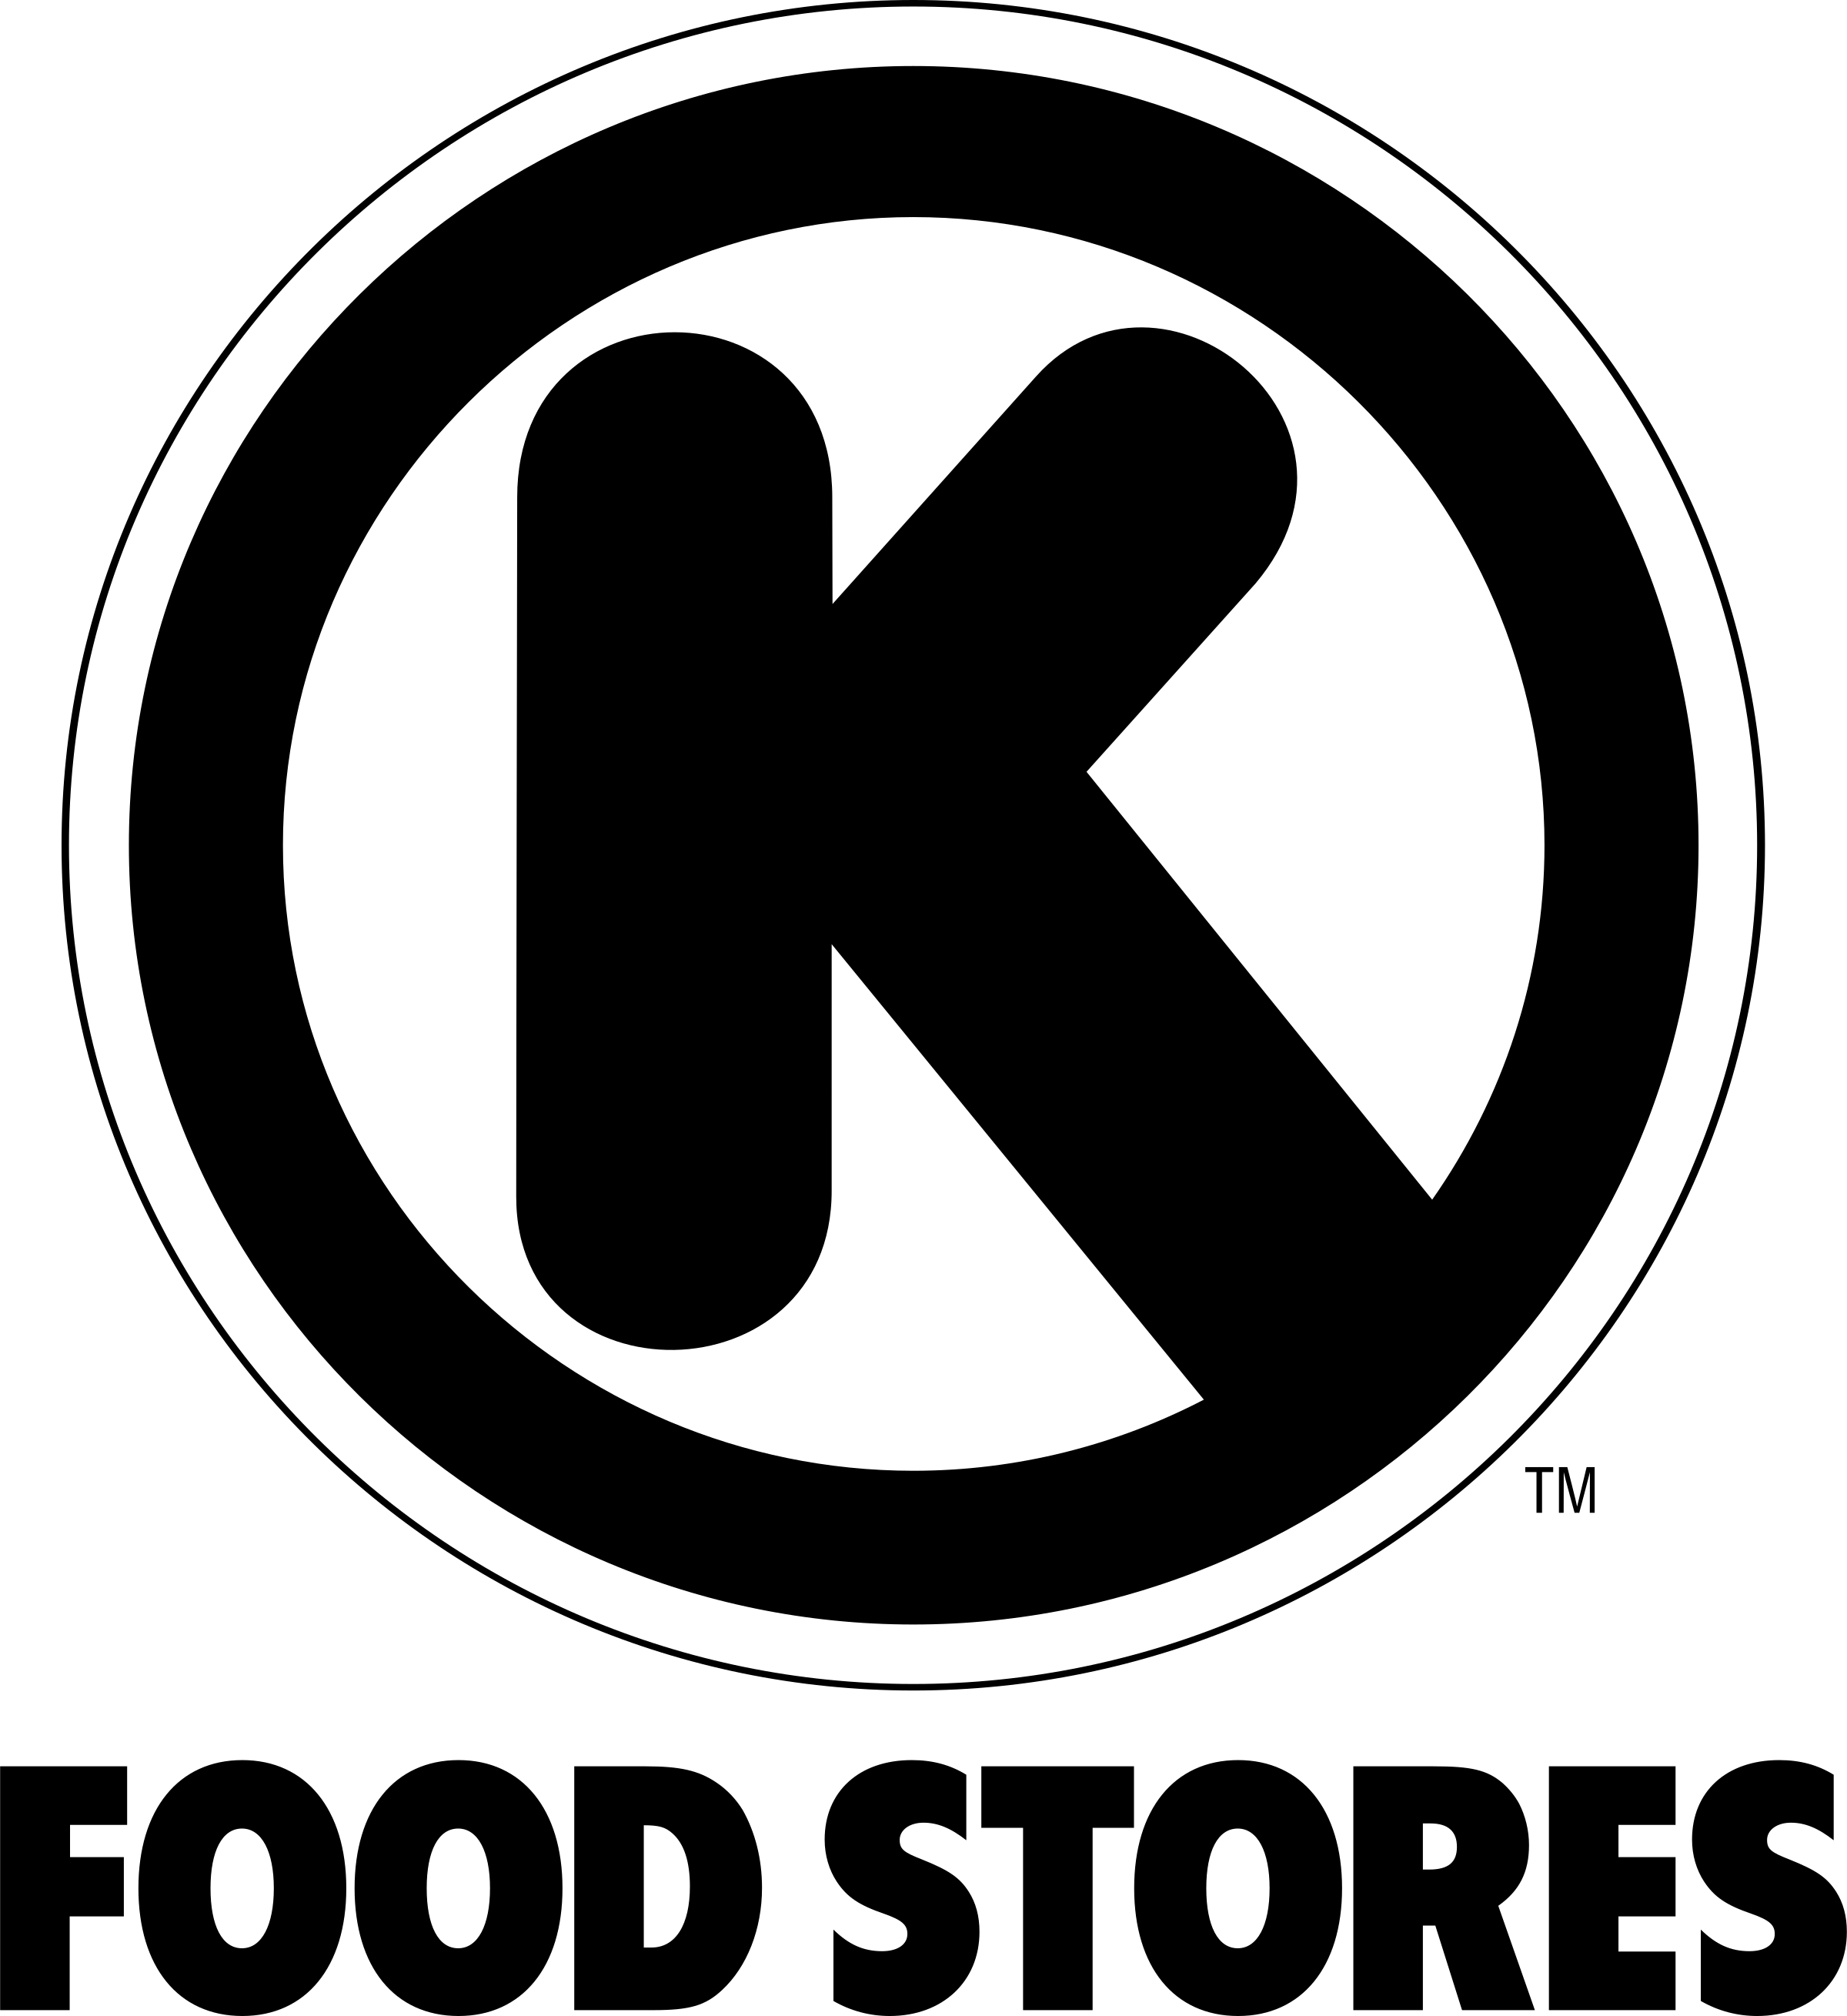 Black Circle K Logo - Circle K food stores Logo PNG Transparent & SVG Vector - Freebie Supply